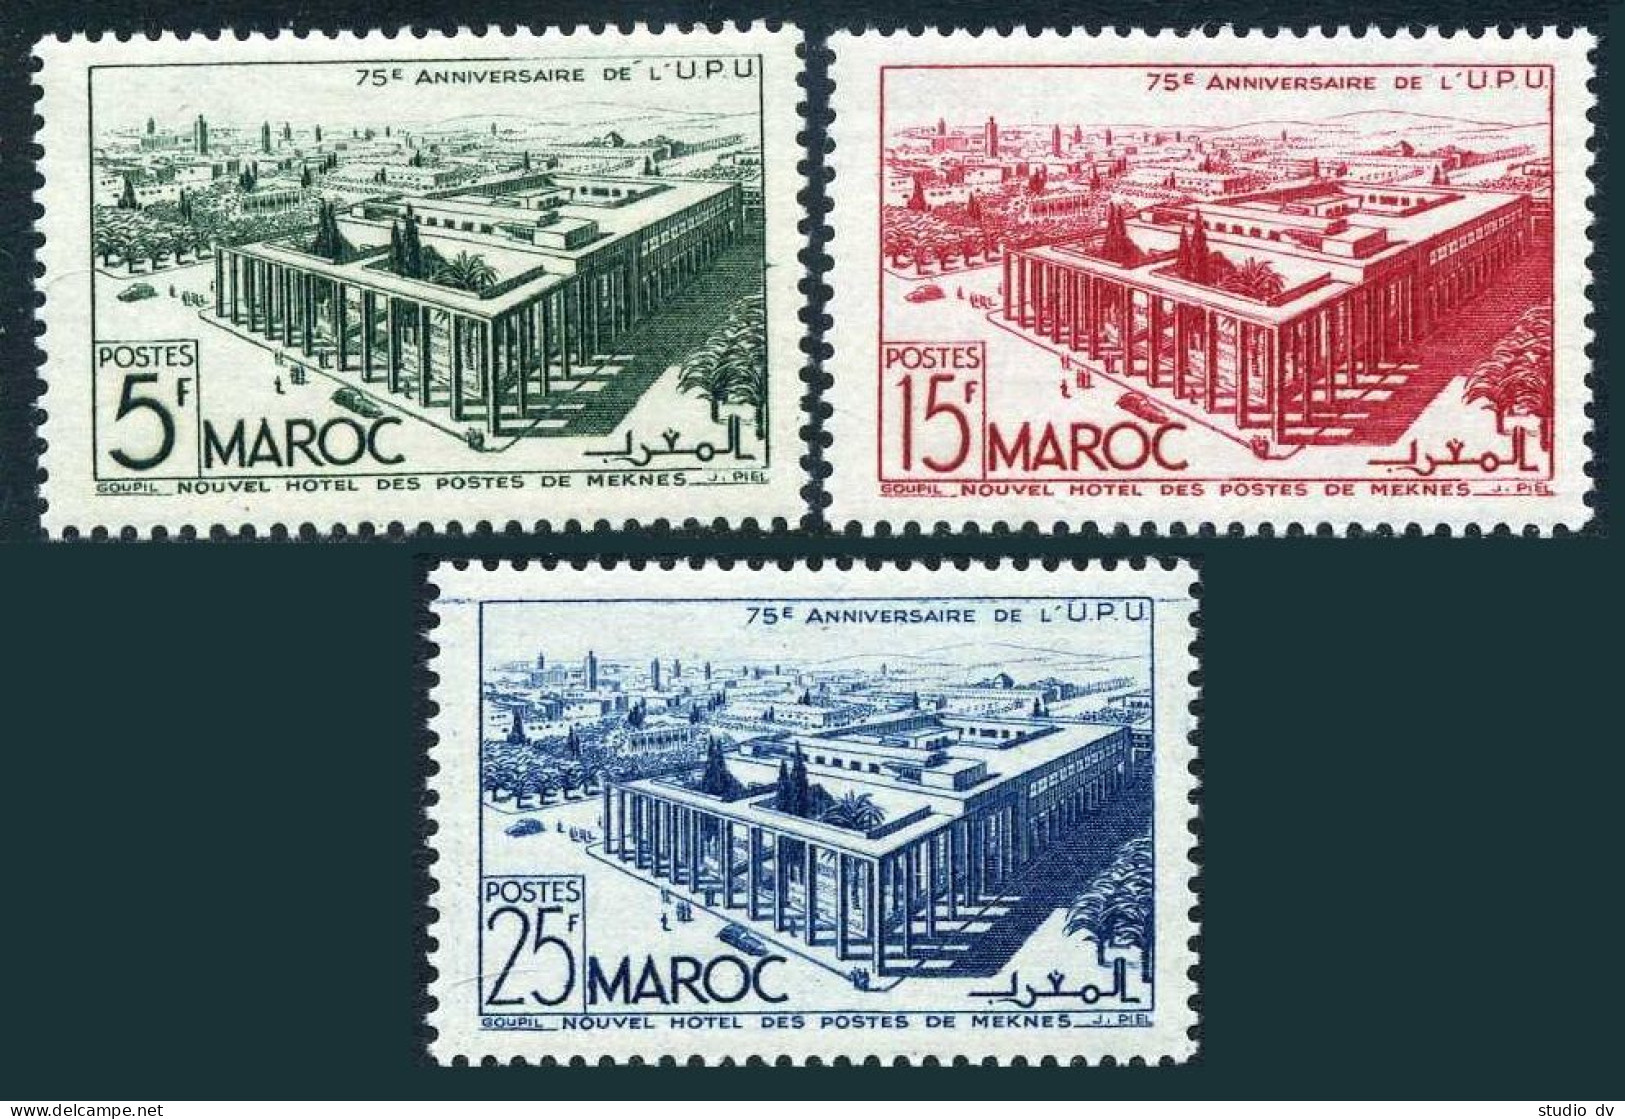 Fr Morocco 256-258, MNH. Michel 293-295. UPU-75, 1949. Postal Building, Meknes. - Marocco (1956-...)